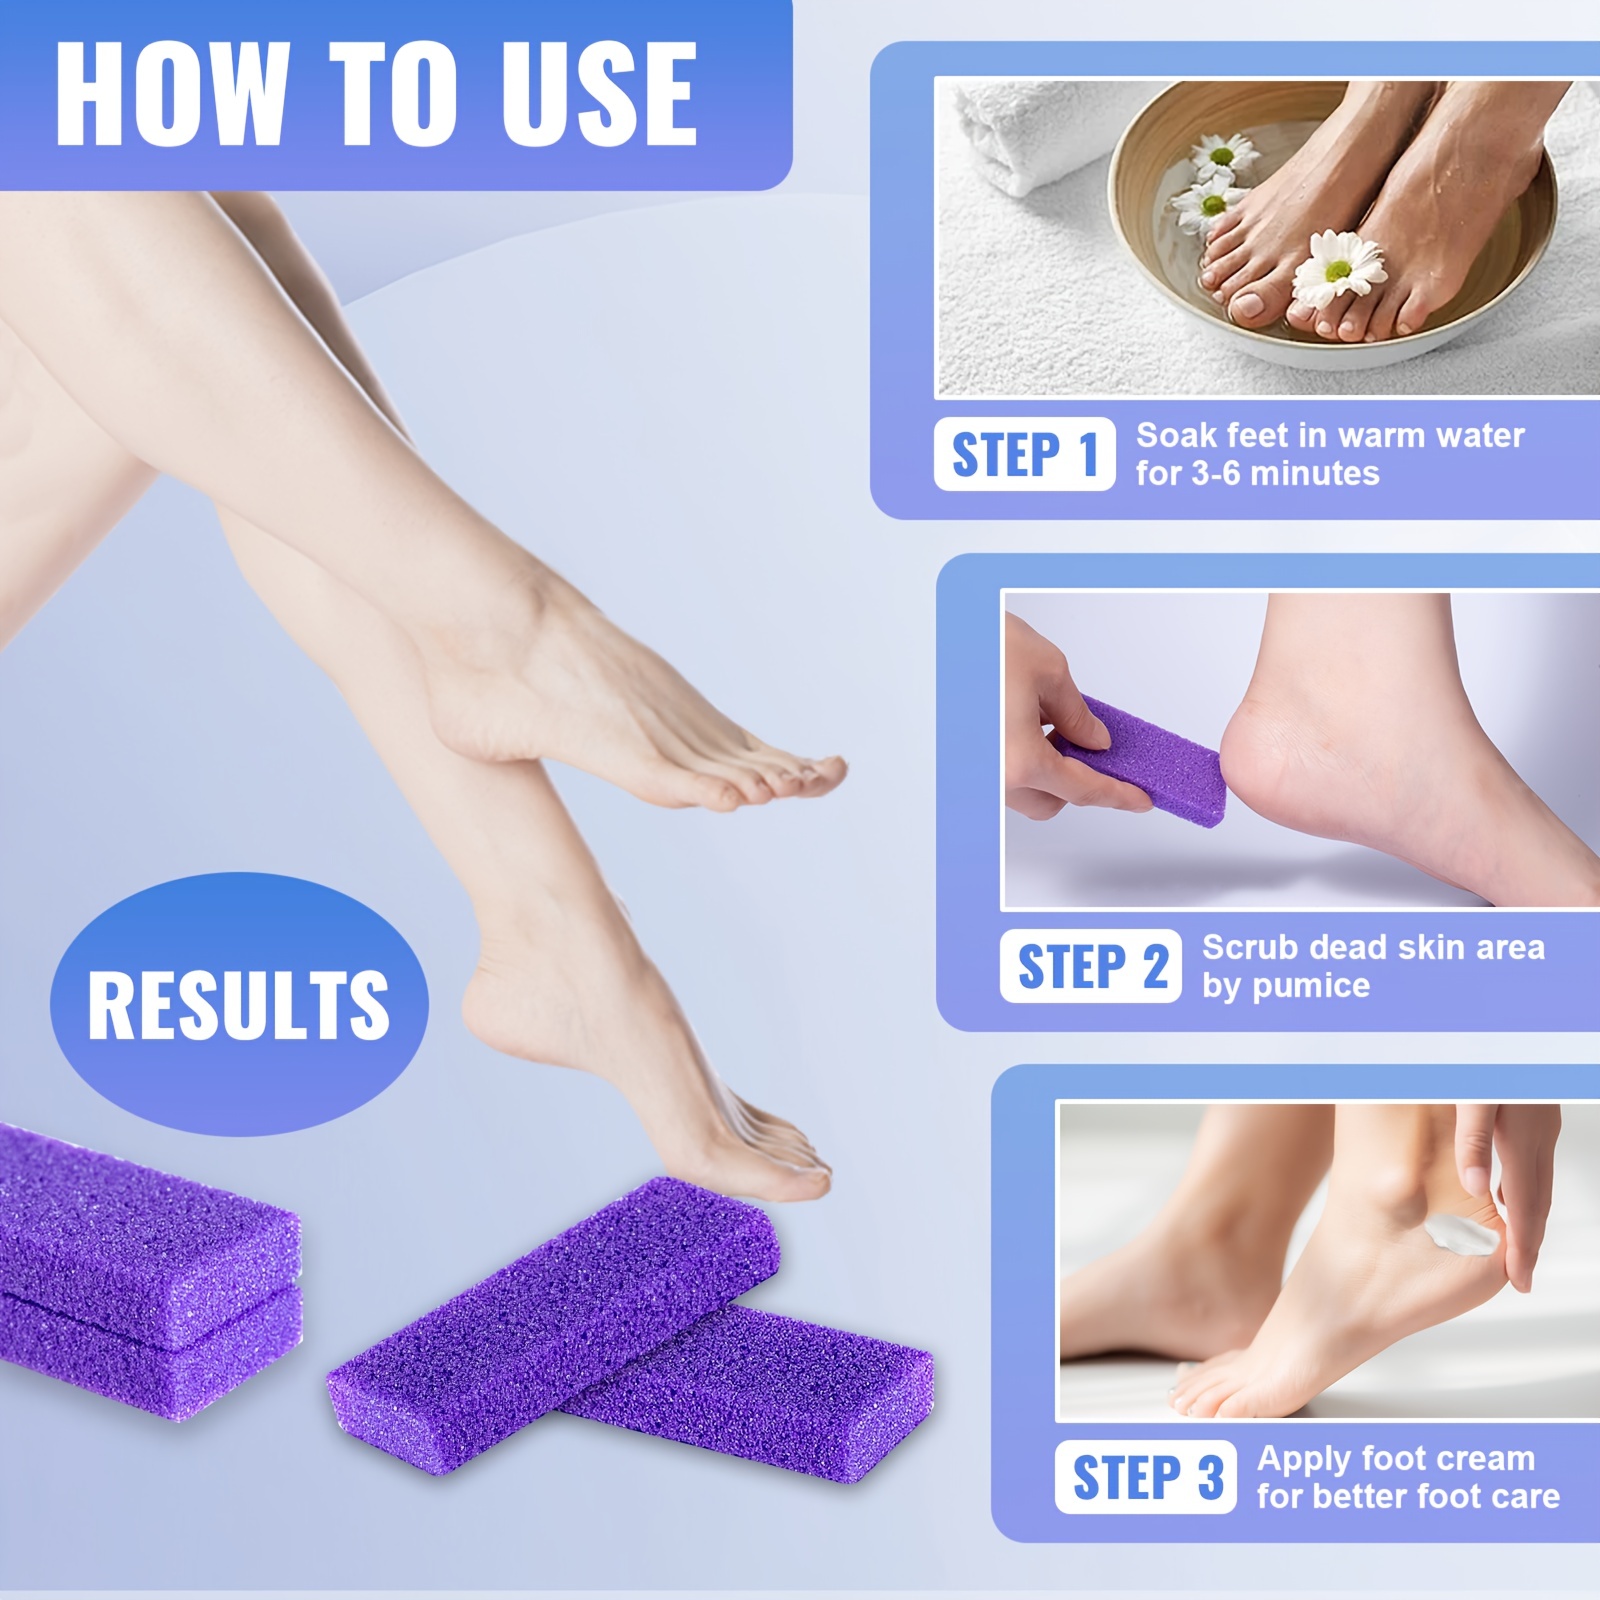 Callus Remover Gel & Pumice Stone Set for Feet & Pedicure